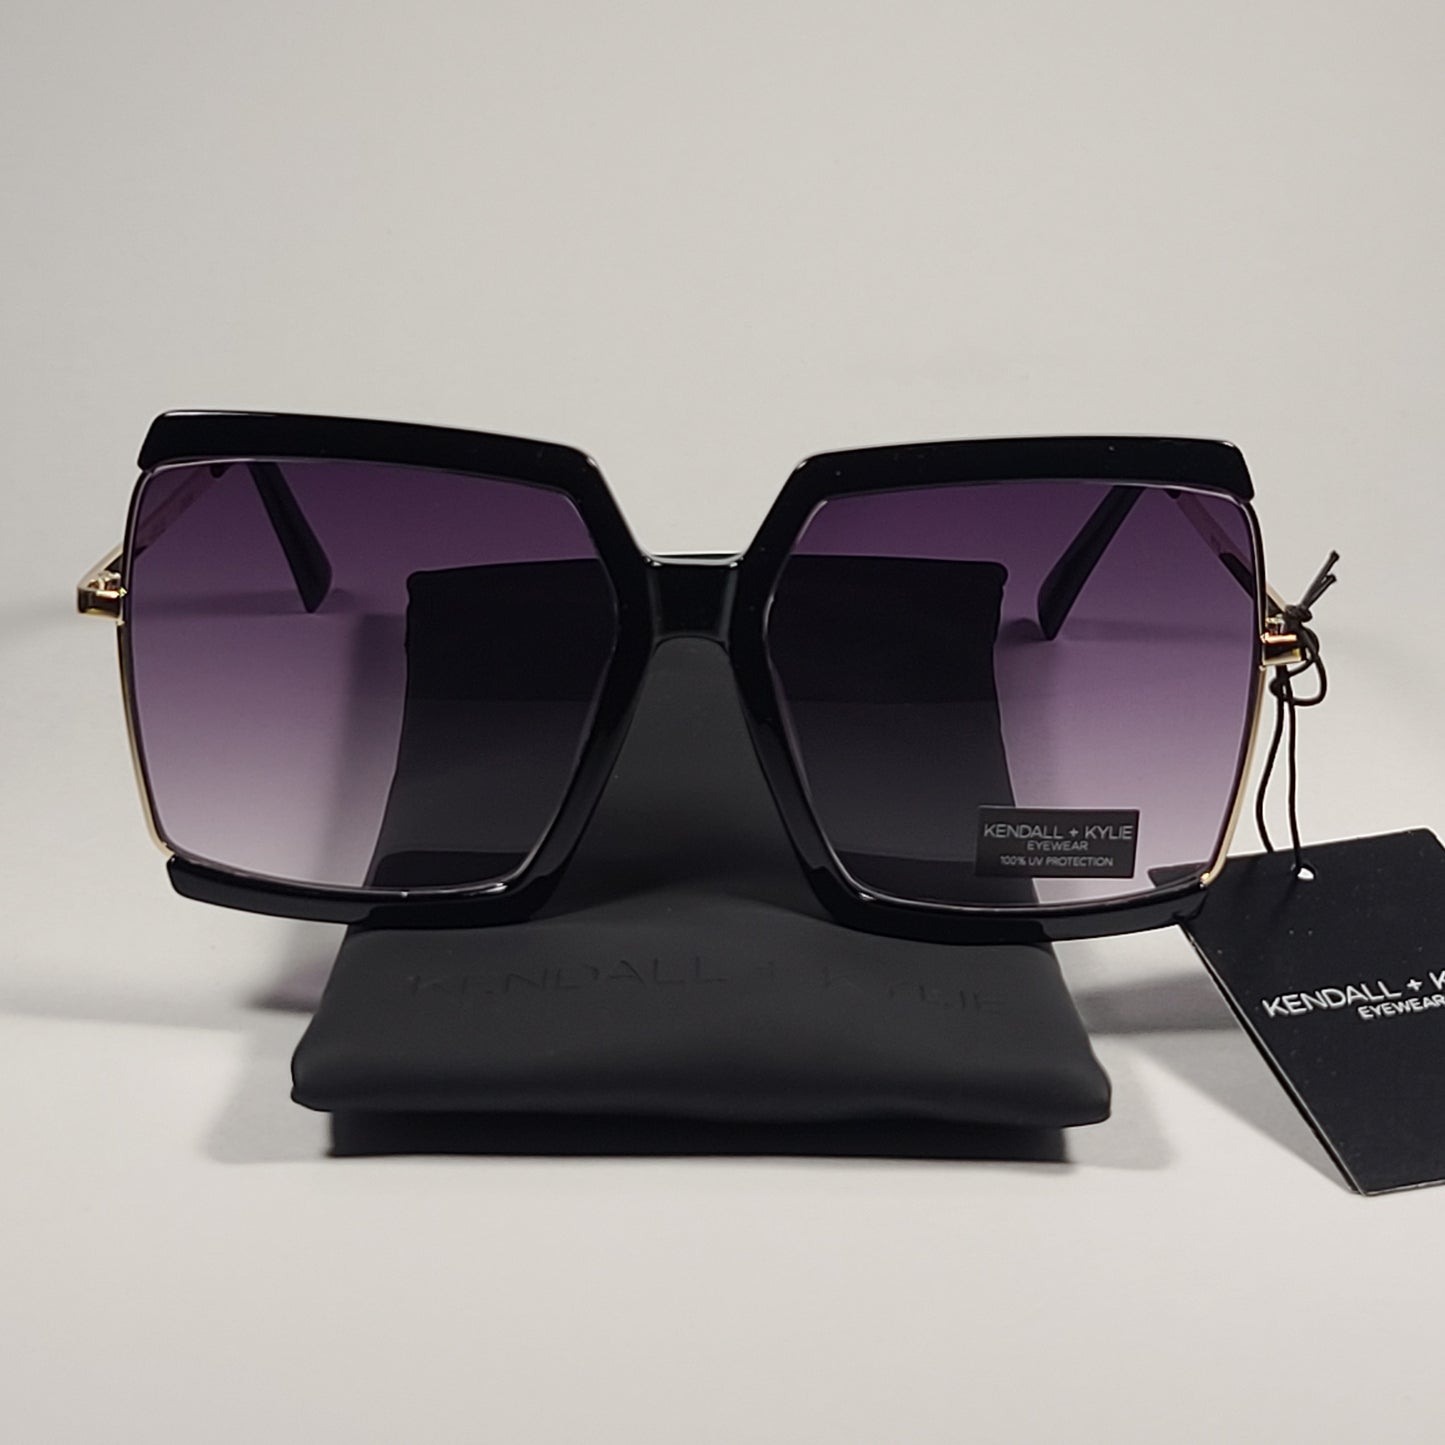 Kendall + Kylie KK5138CE 001 Kendra Oversize Sunglasses Black Gold Frame Smoke Gradient Lens - Sunglasses